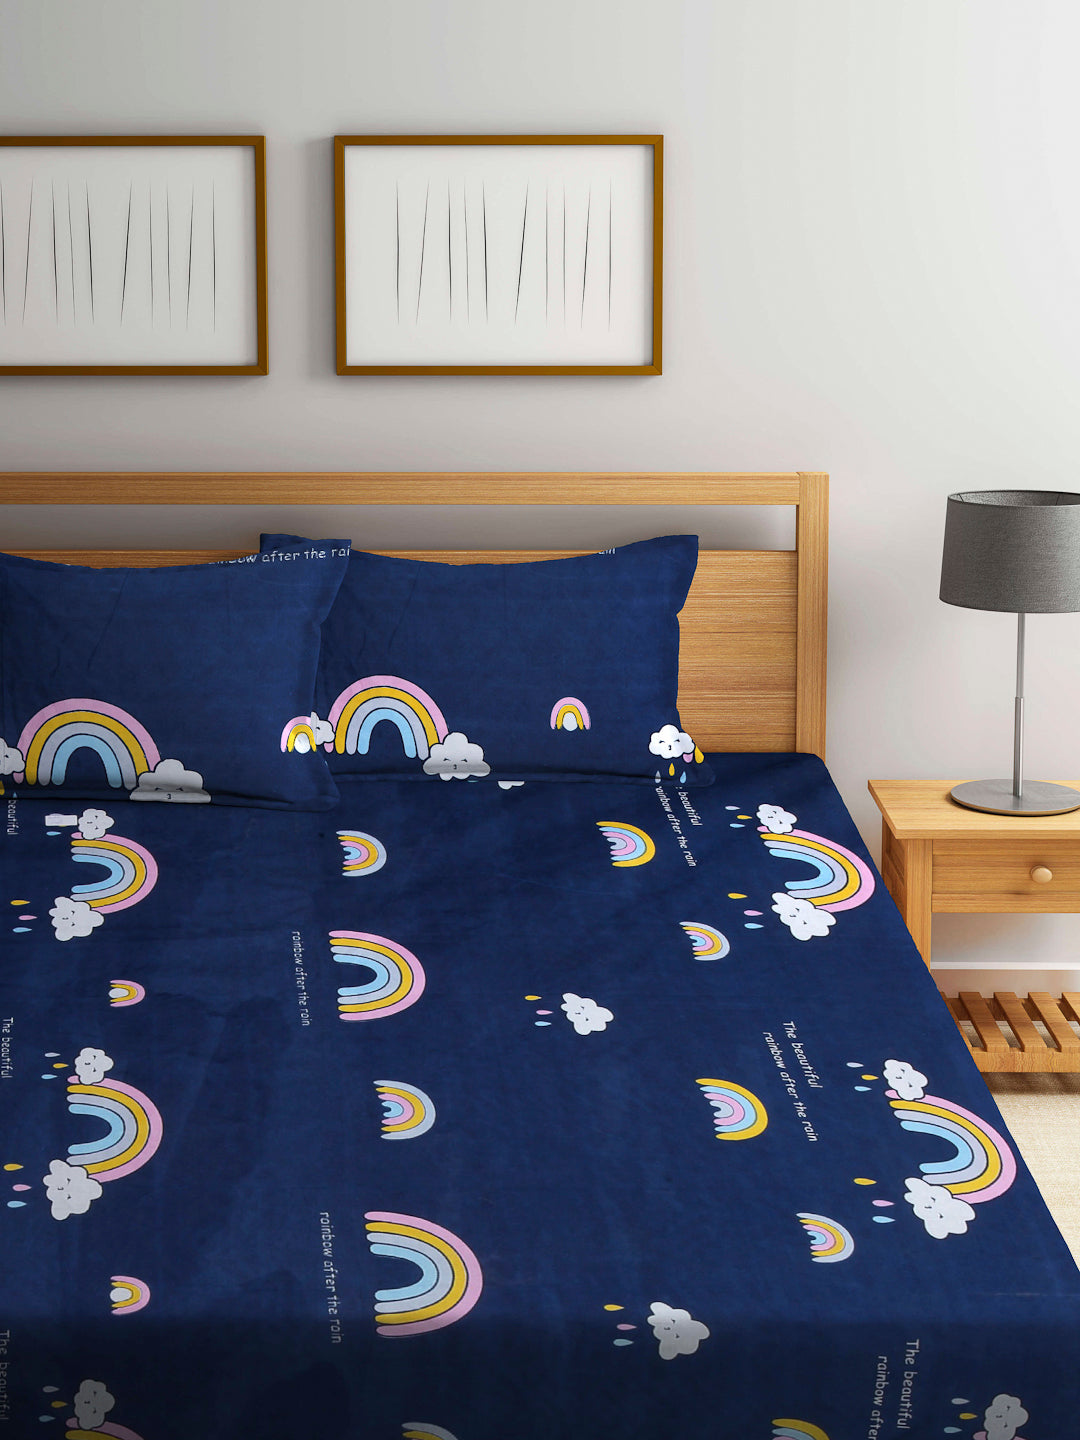 Arrabi Blue Cartoon TC Cotton Blend Double Size Bedsheet with 2 Pillow Cover